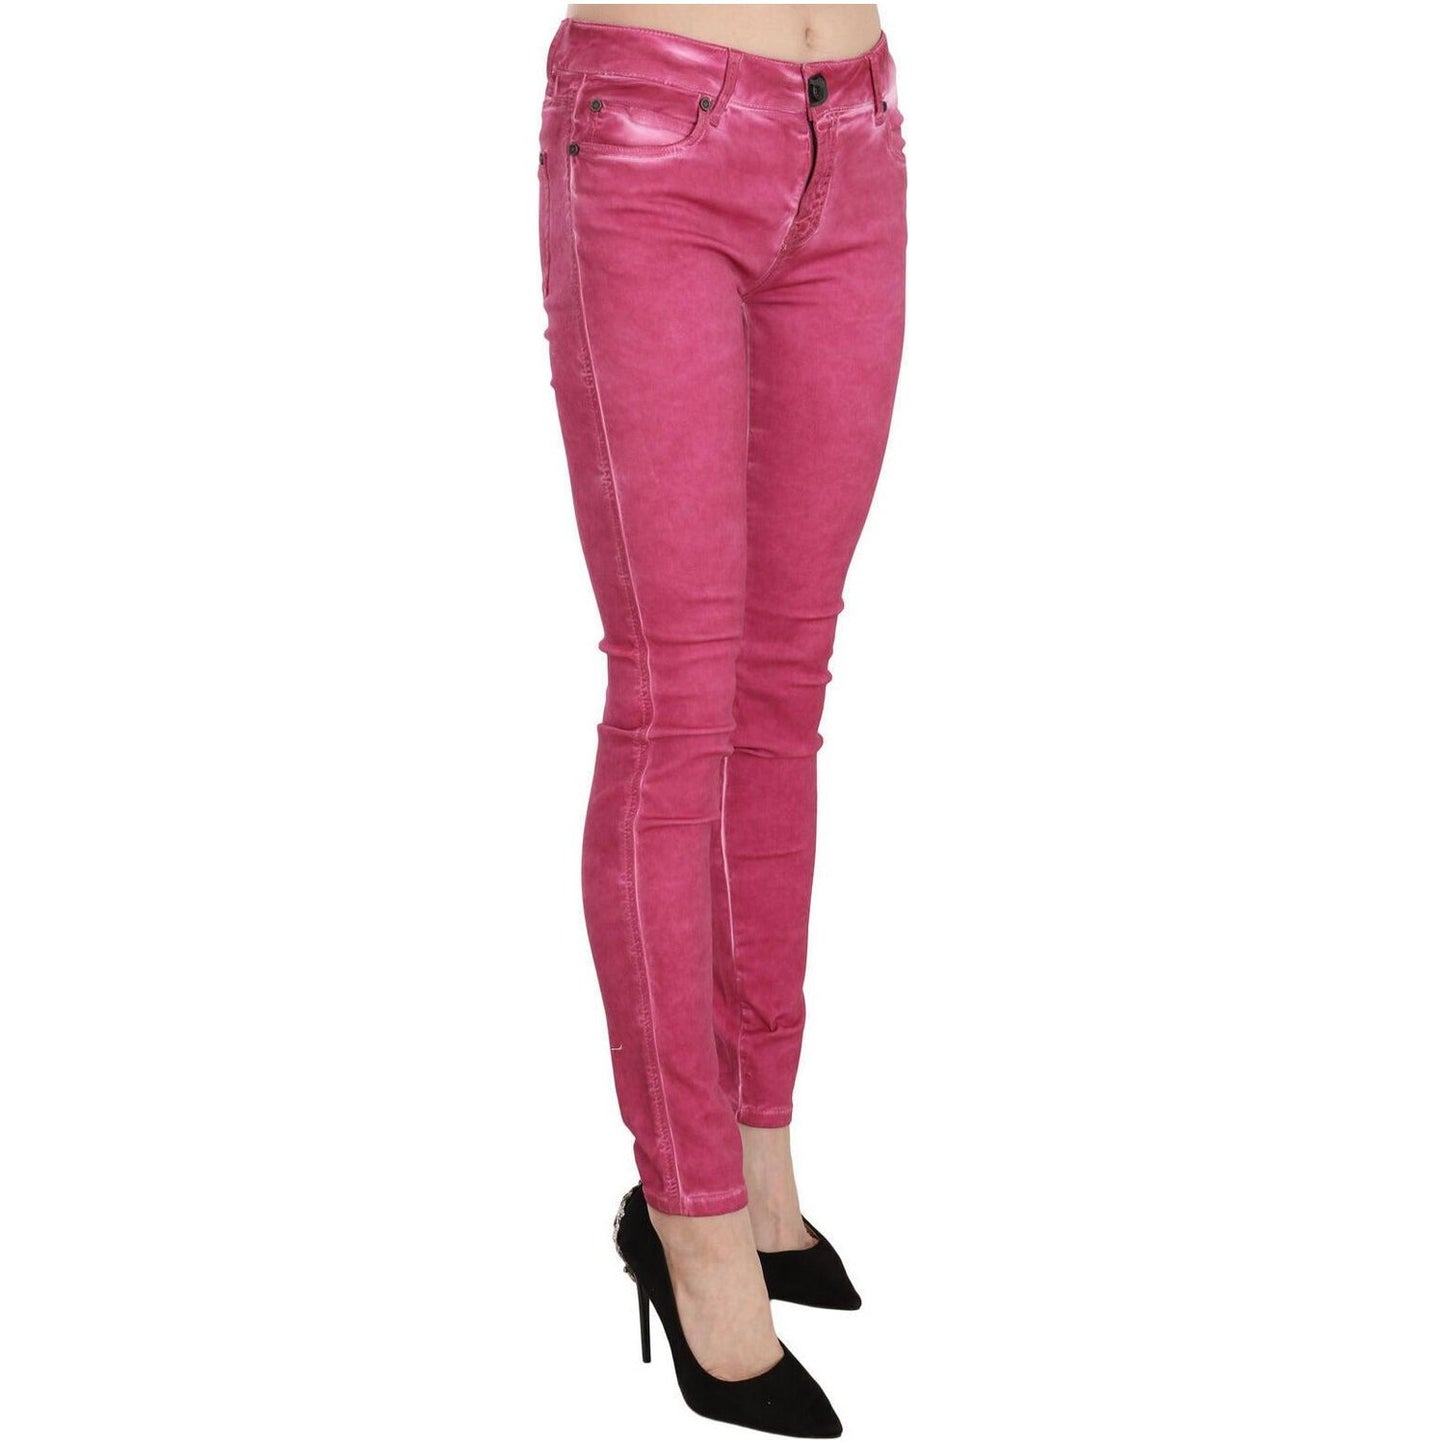 Dolce & Gabbana Chic Pink Mid Waist Skinny Pants pink-velvet-mid-waist-skinny-trouser-pants Jeans & Pants s-l1600-2022-09-20T114135.557-1cca372b-c25.jpg